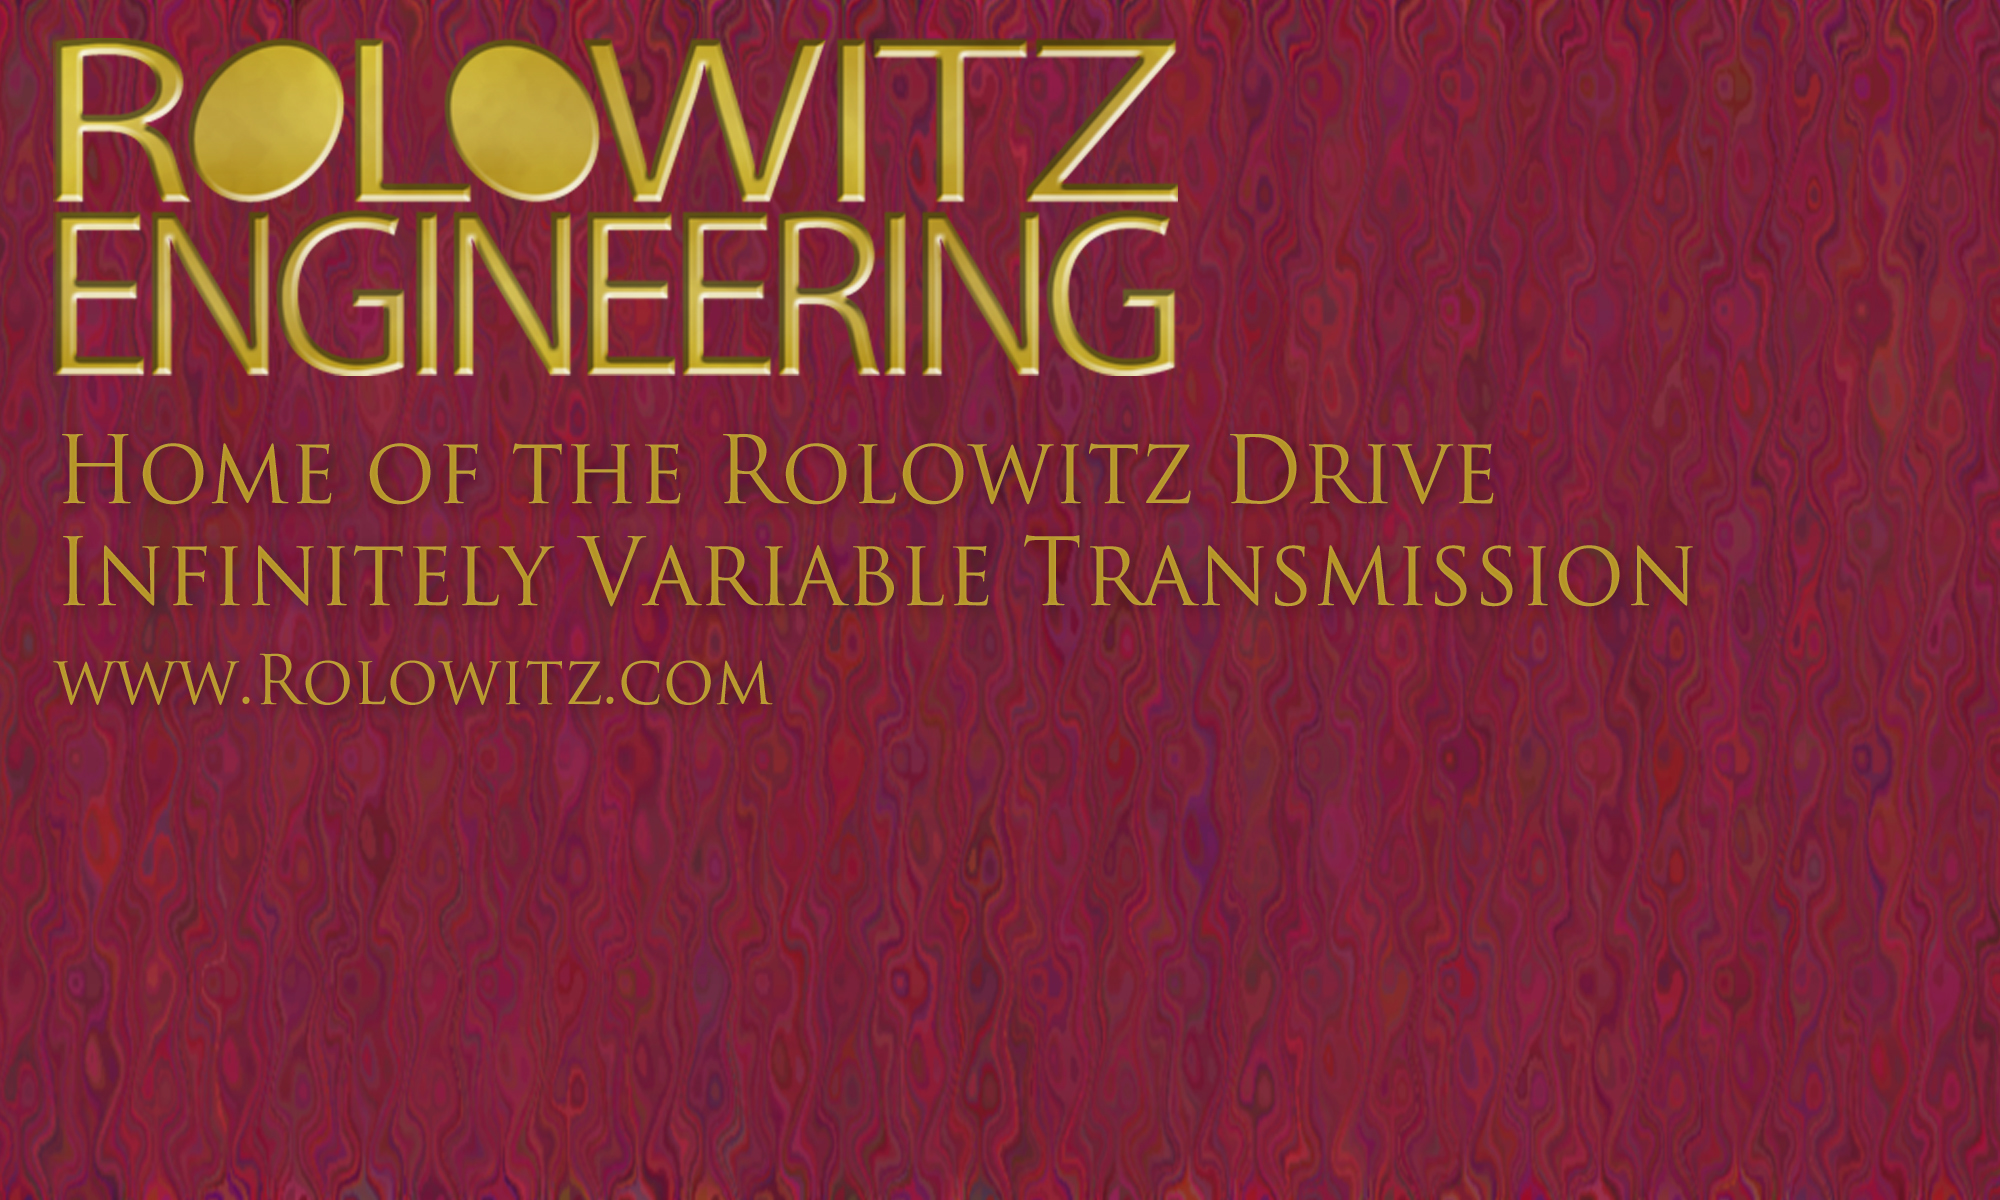 Rolowitz Engineering